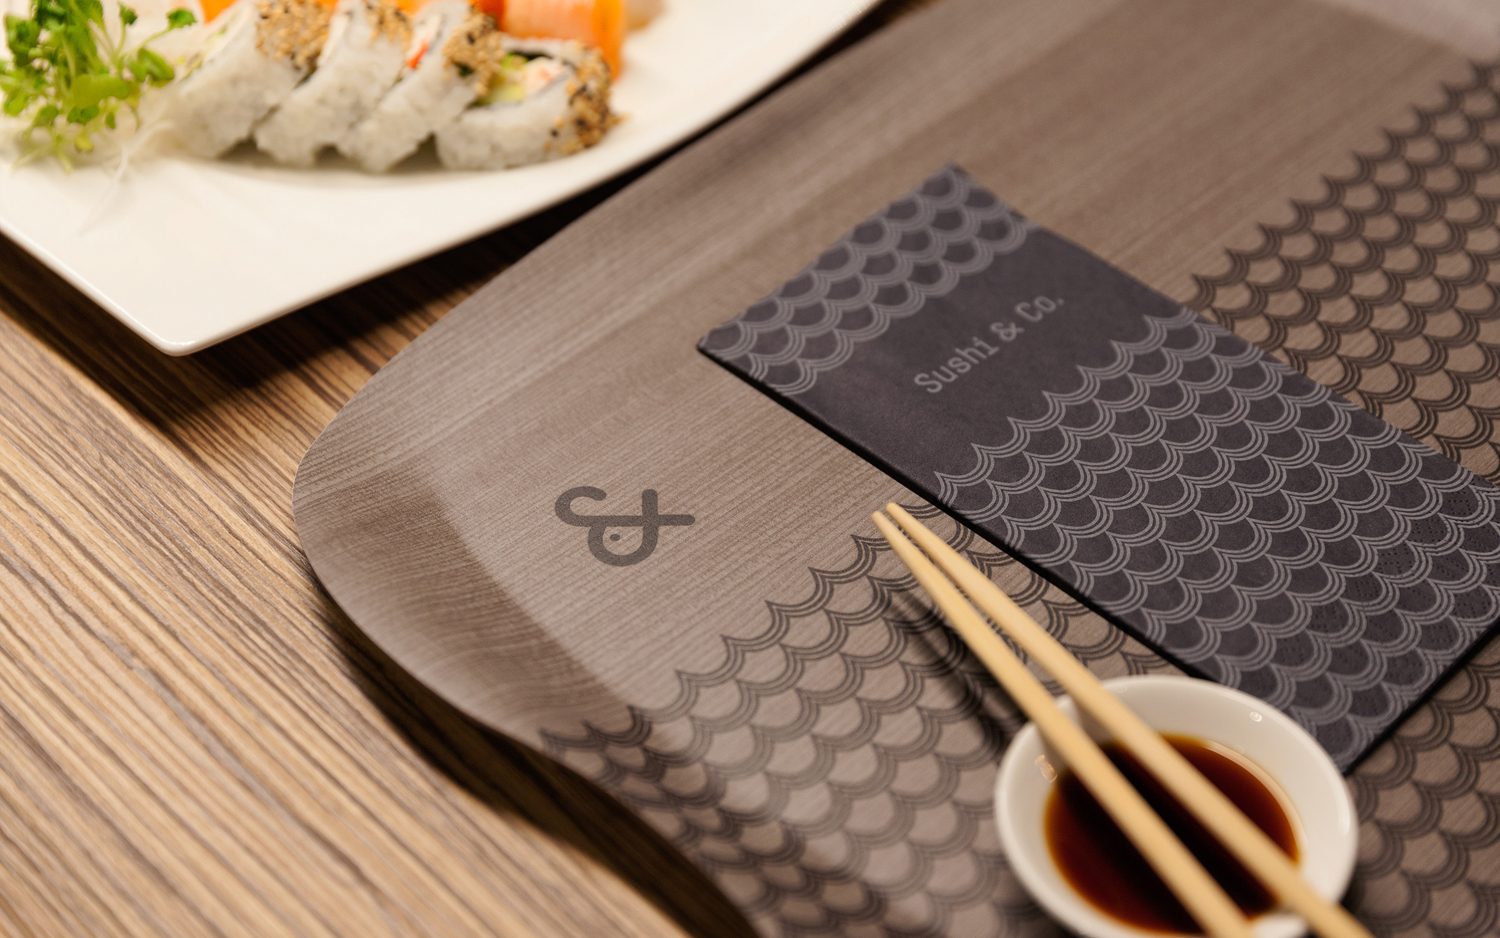 Visual identity, napkins and trays for cruise ship restaurant Sushi & Co. designed by Bond